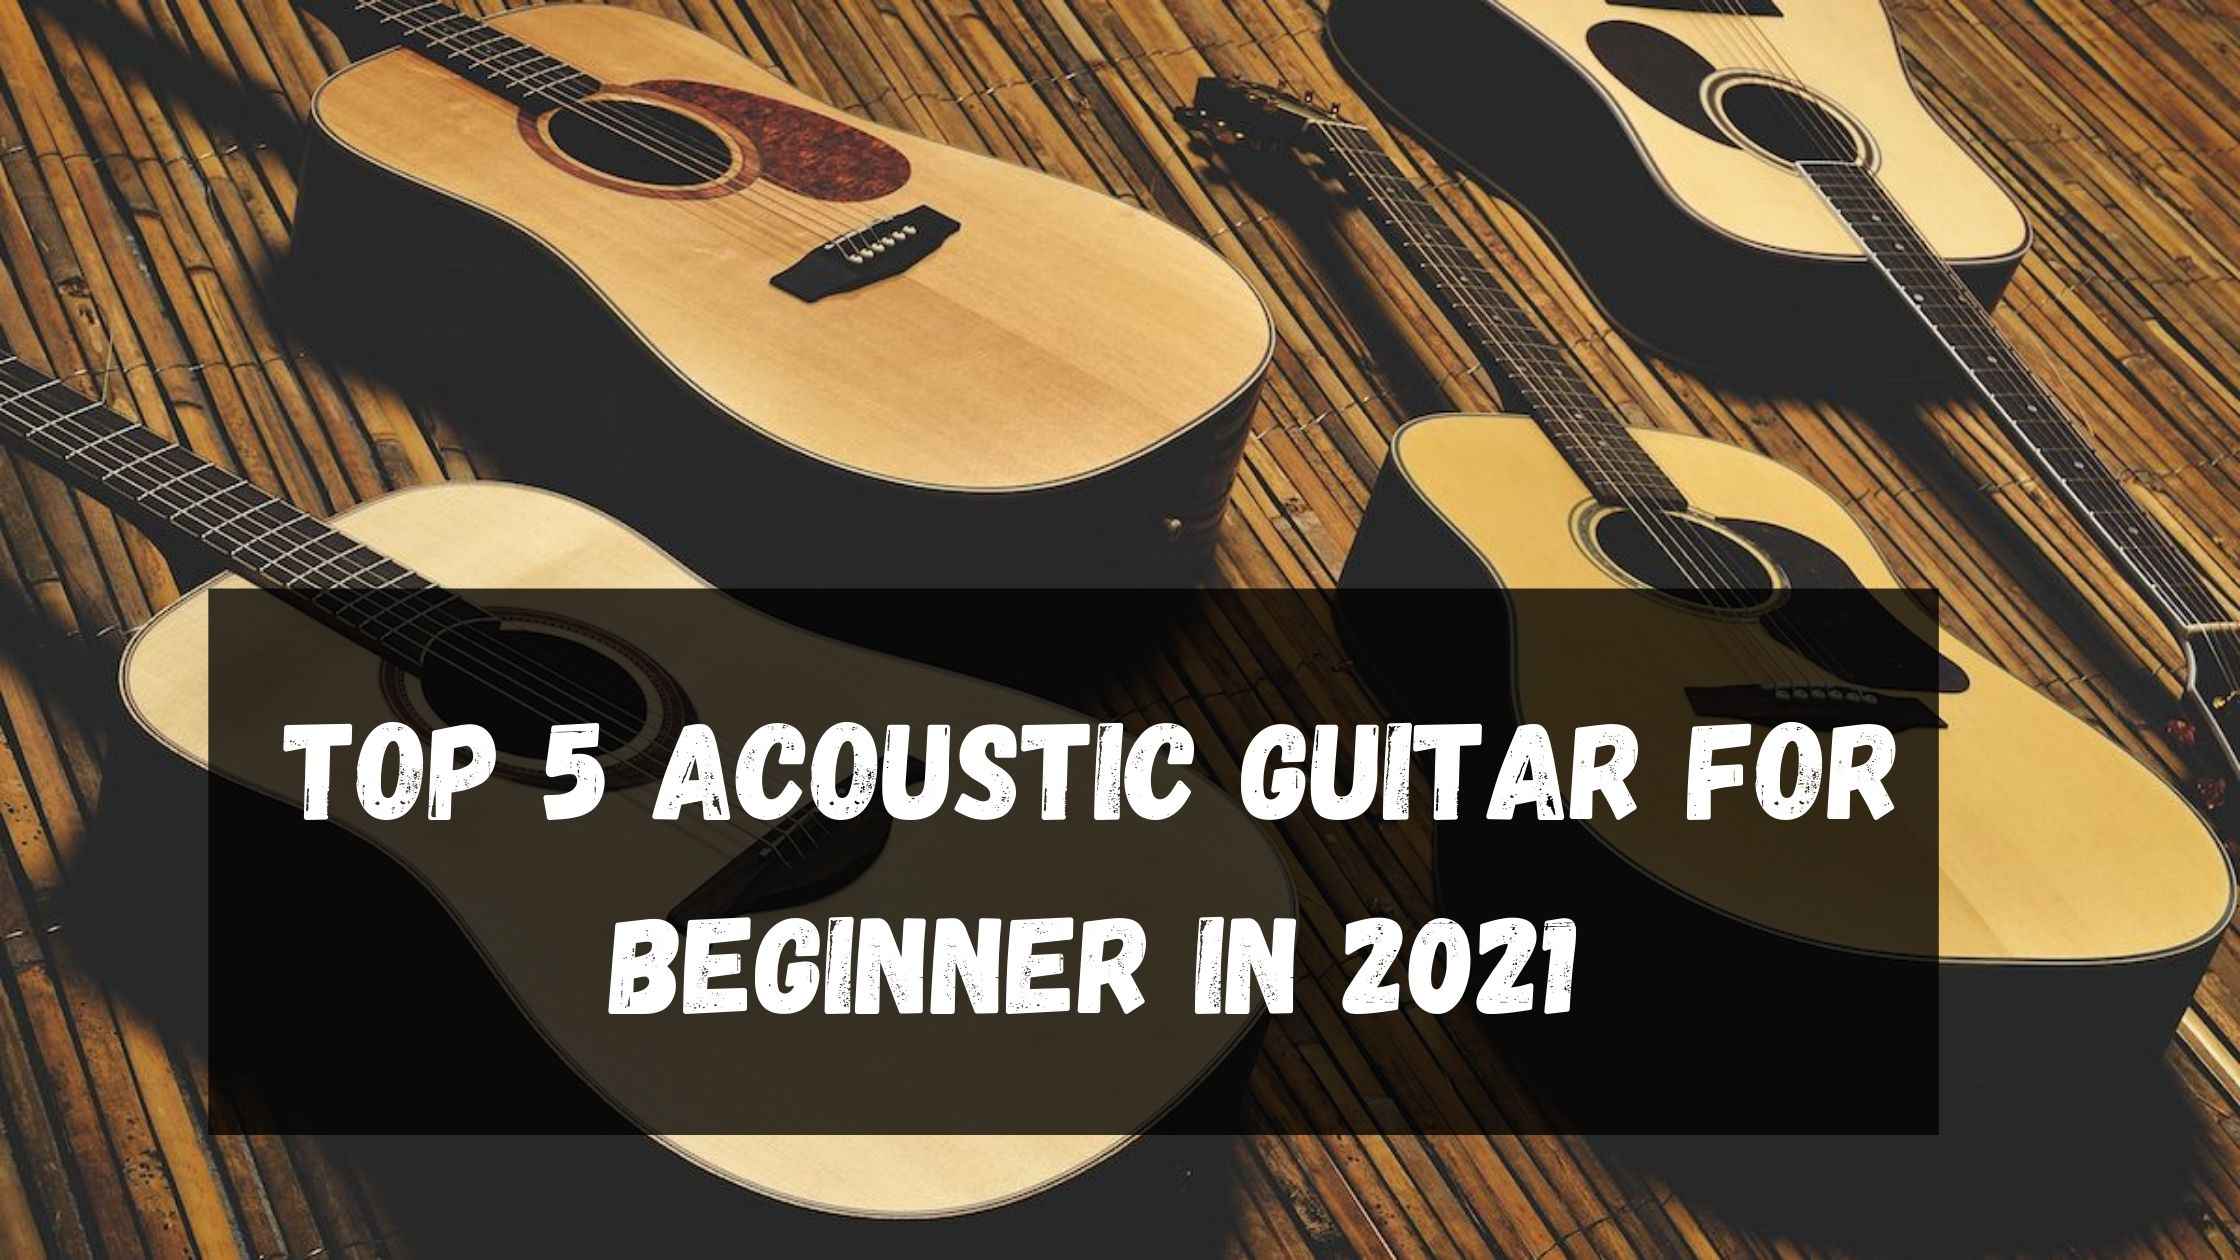 Top 5 Acoustic Guitar for Beginner in 2021